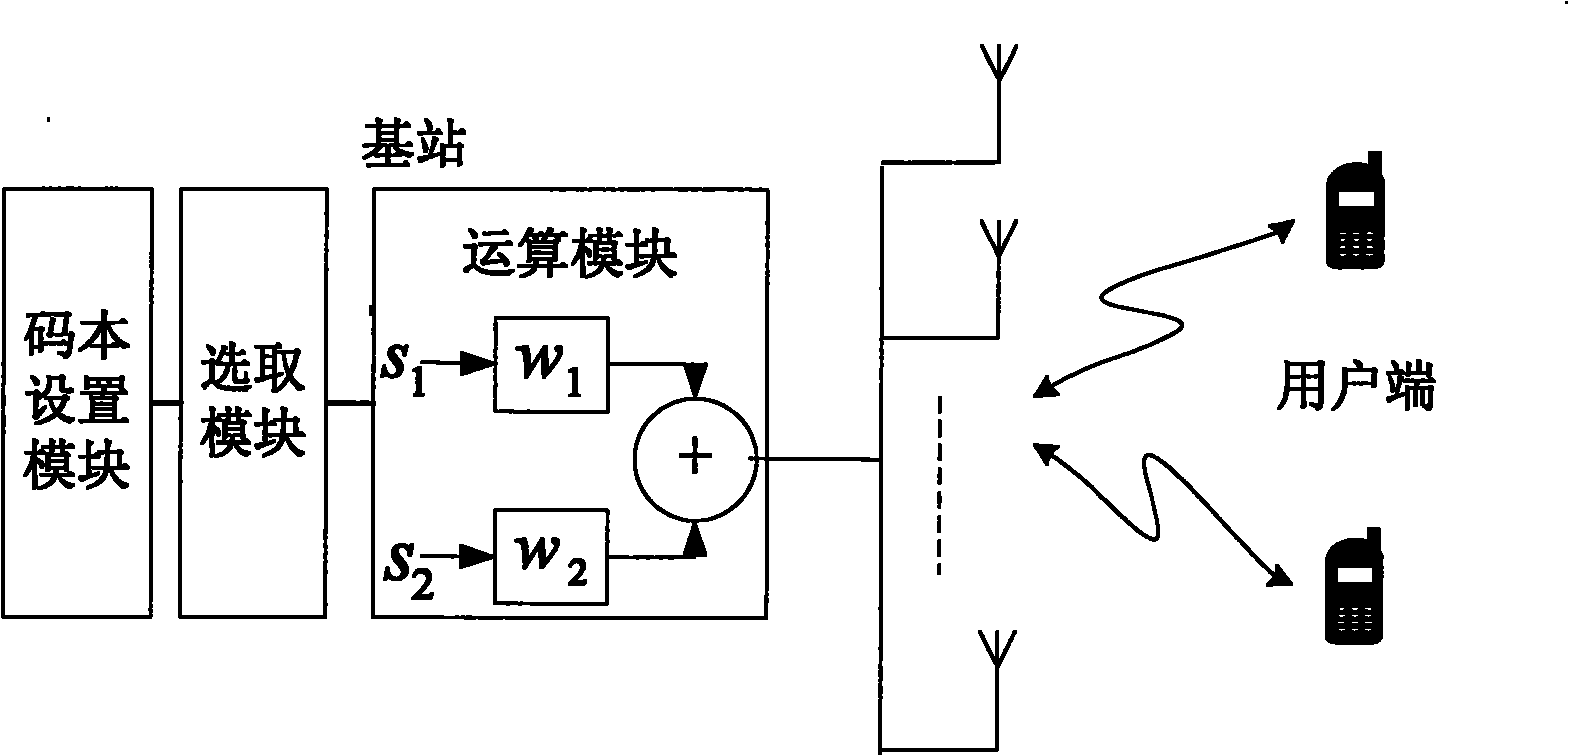 Multi-user random beam forming method and system